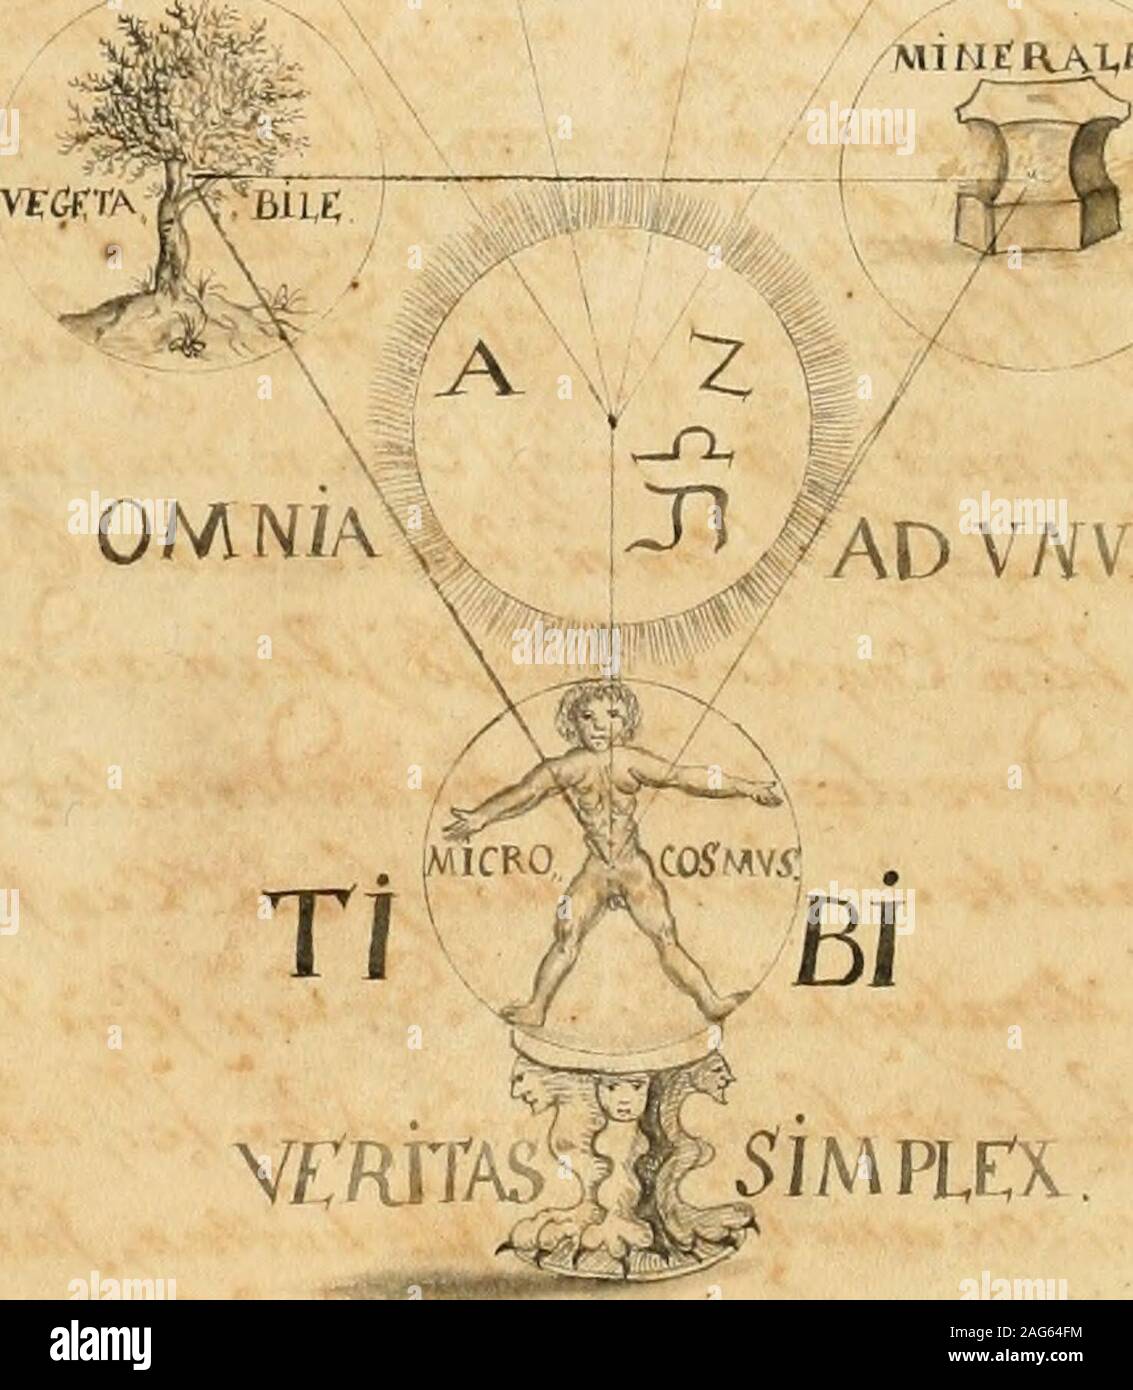 . Manly Palmer Hall raccolta di manoscritti alchemici, 1500-1825. AB VNO &gt; 4GArjj^YltR/AAy AaVAVXAER. y MlHeiAXF AD V/VVM. vrRrrAS5SE(L^iM pia. 2^2., £/&GT;V. Foto Stock